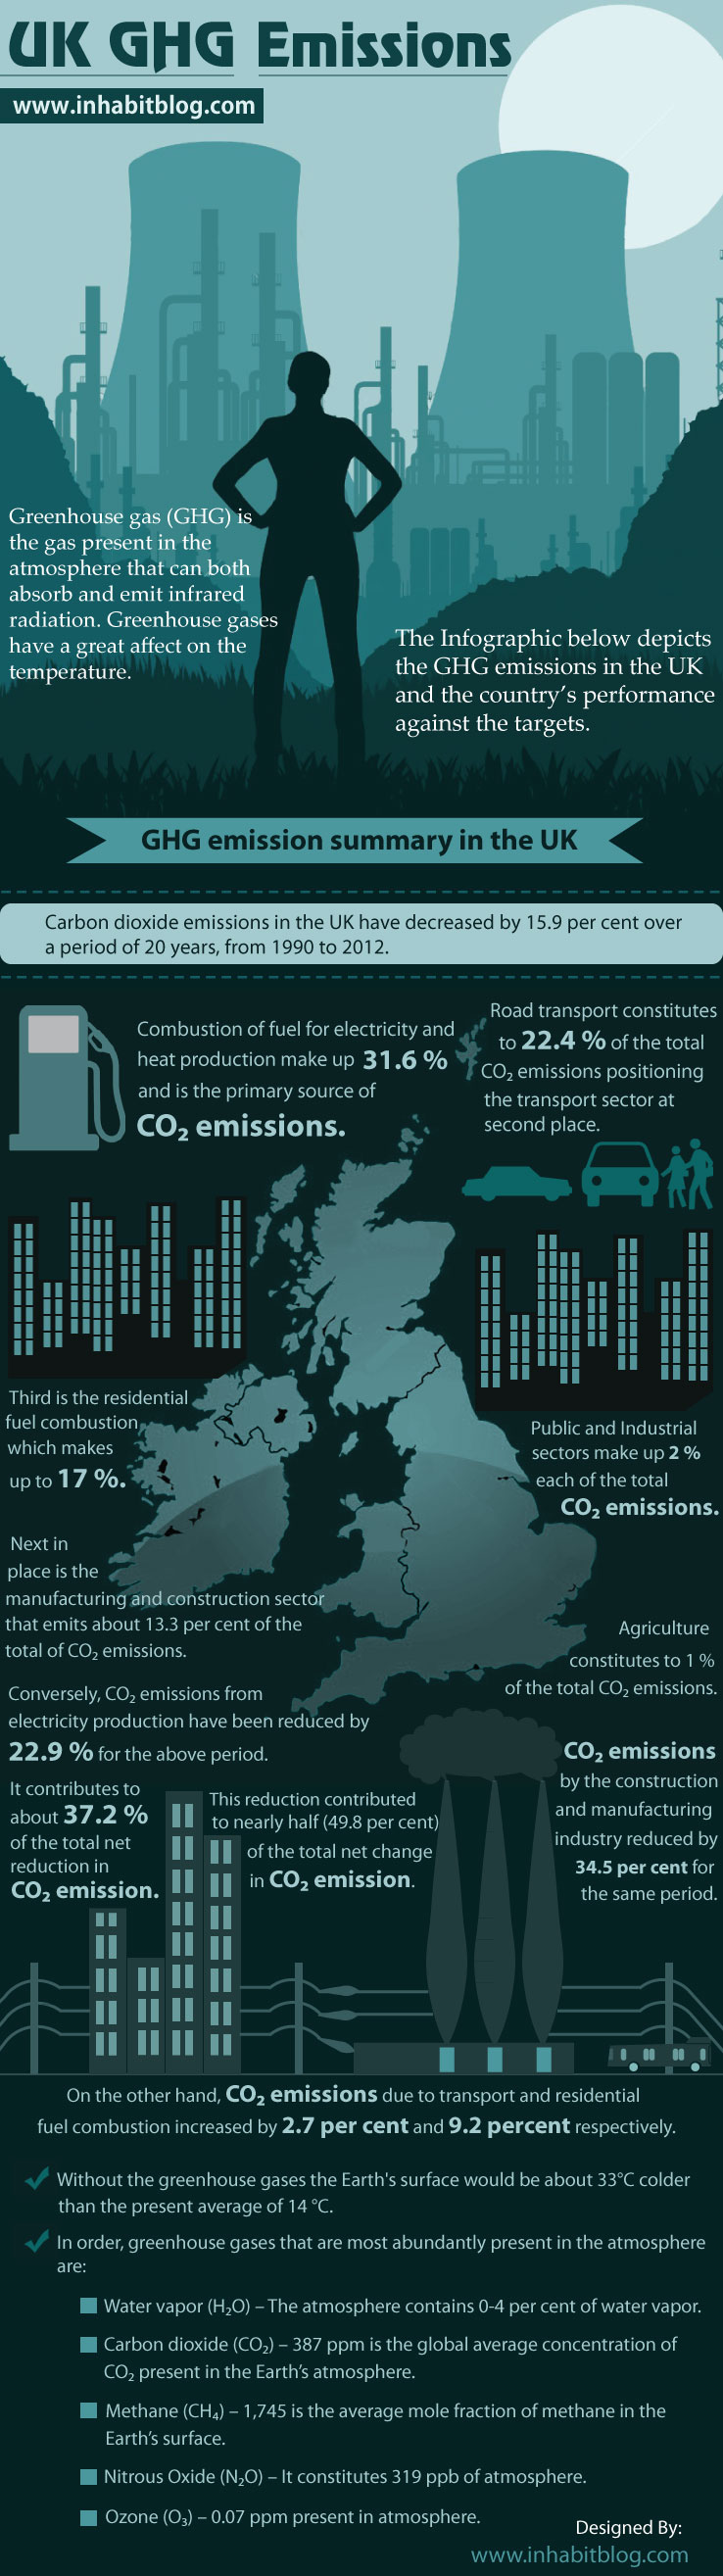 UK GHG Emissions [InfoGraphic]